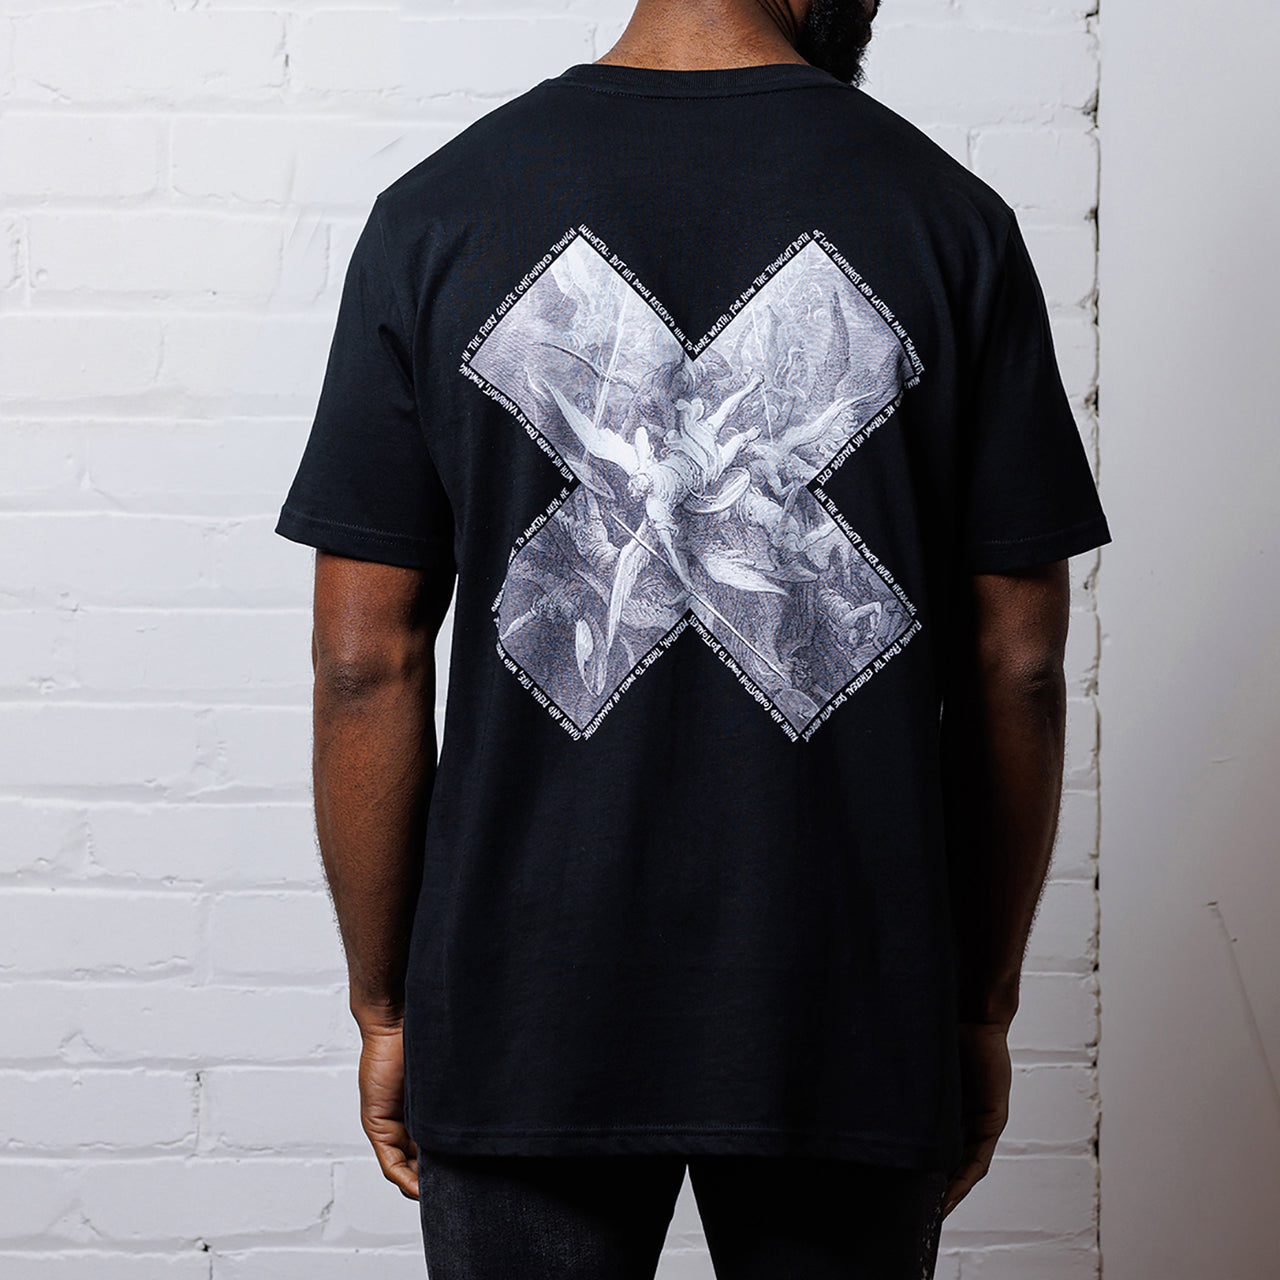 Paradise Lost X Imprint - Tshirt - Black